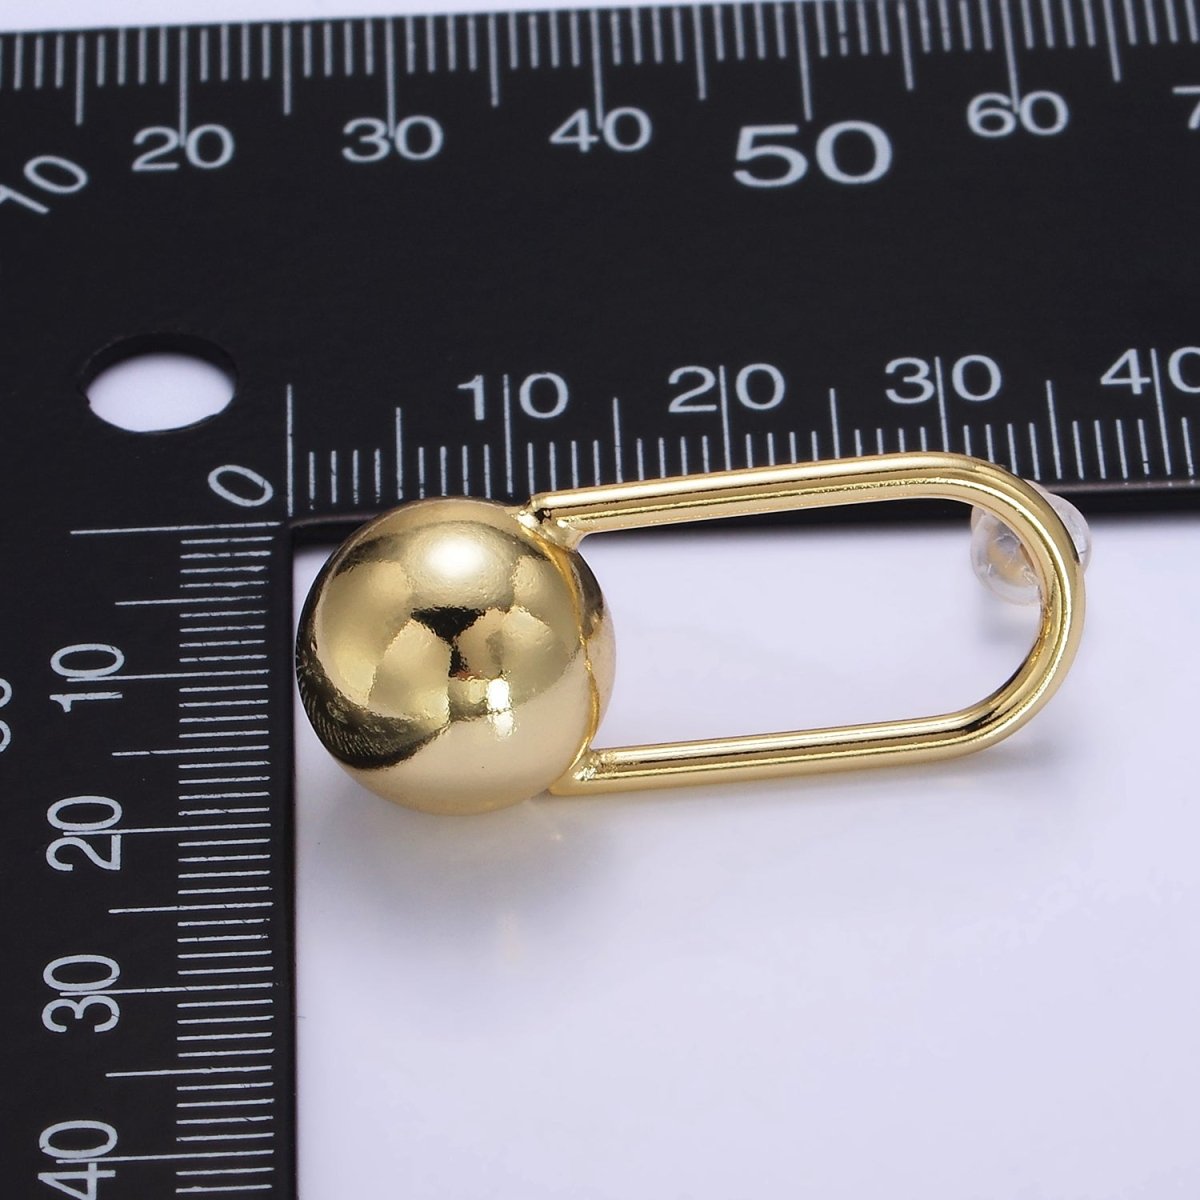 24K Gold Filled 35mm Ball Oblong Drop Stud Stud Earrings | P525 - DLUXCA